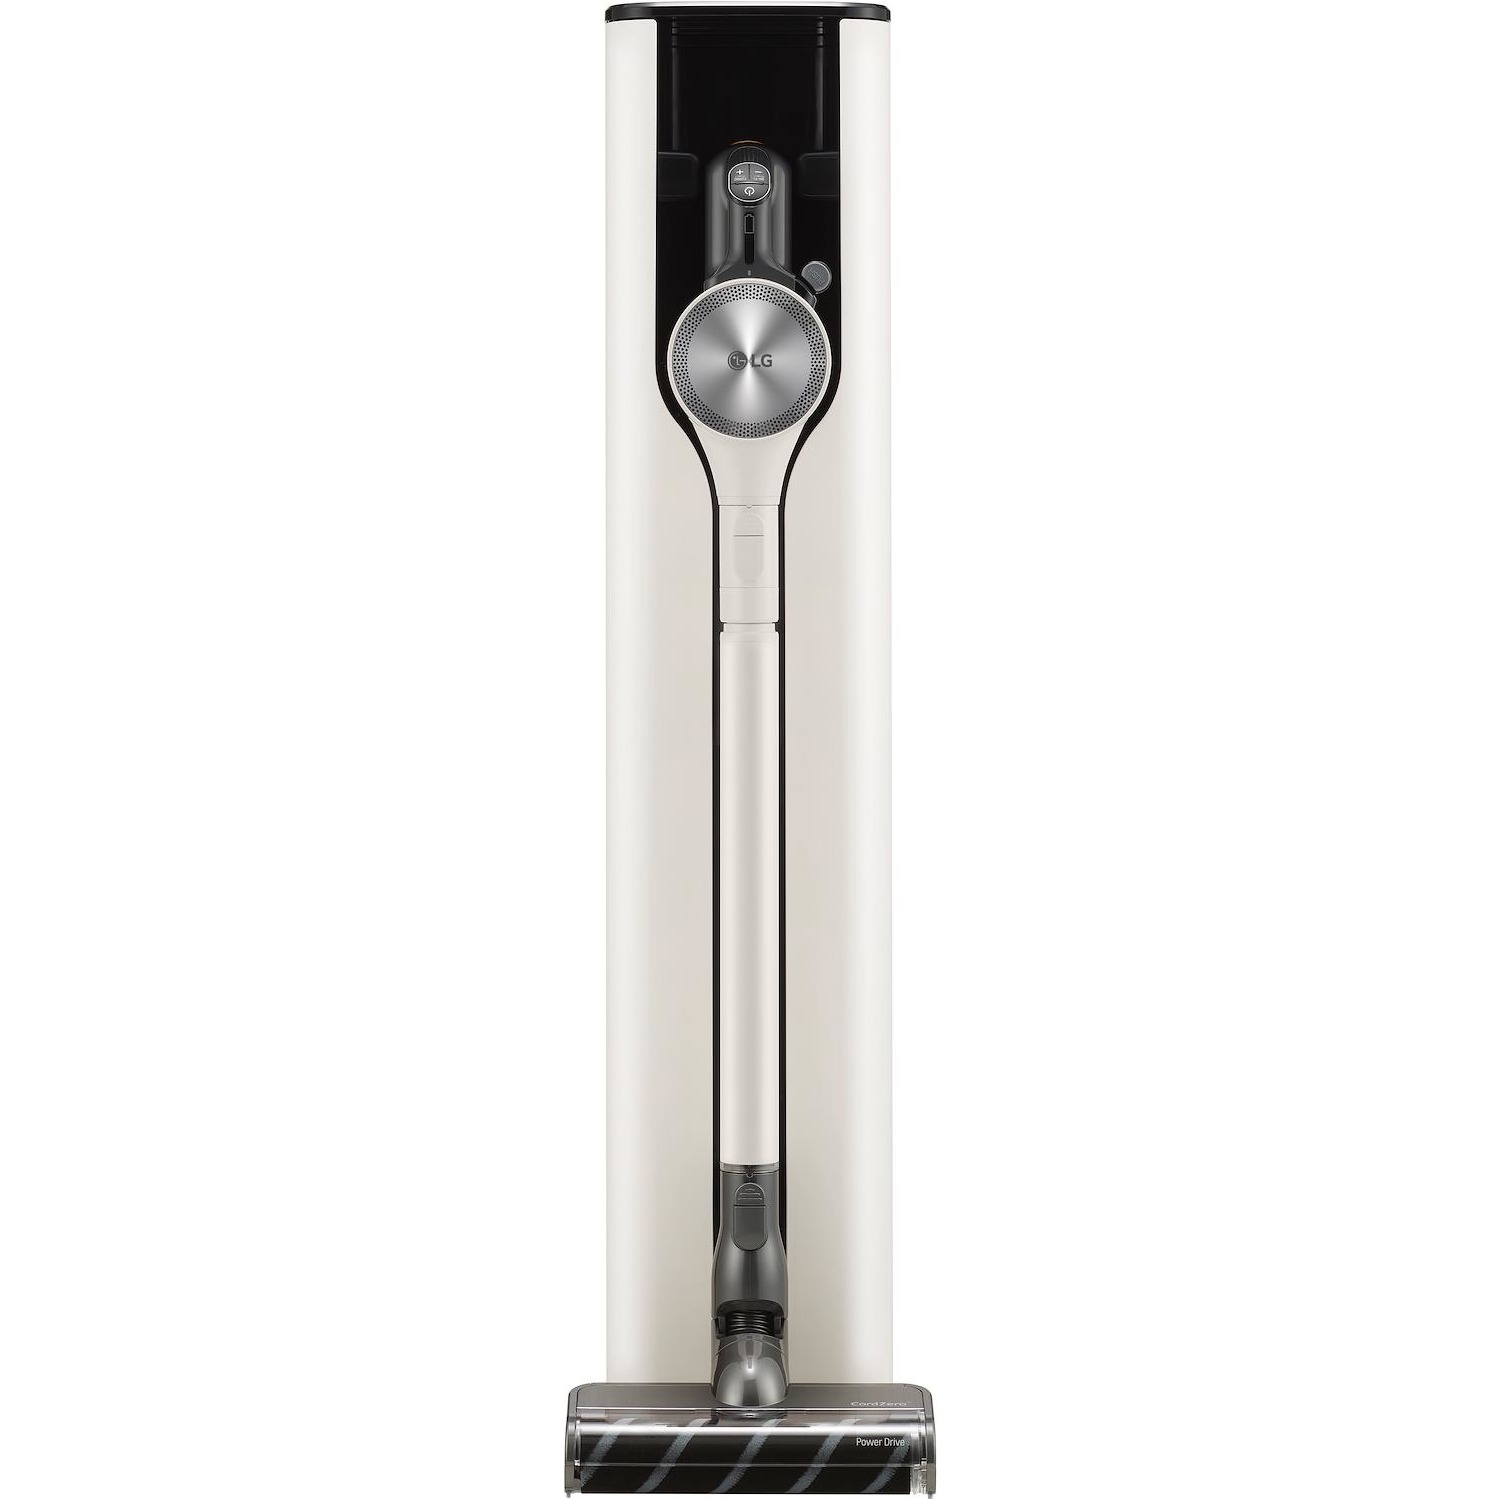 Immagine per Aspirapolvere ricaricabile LG A9T-ULTRA1C CordZero All-in-One Tower bianco da DIMOStore